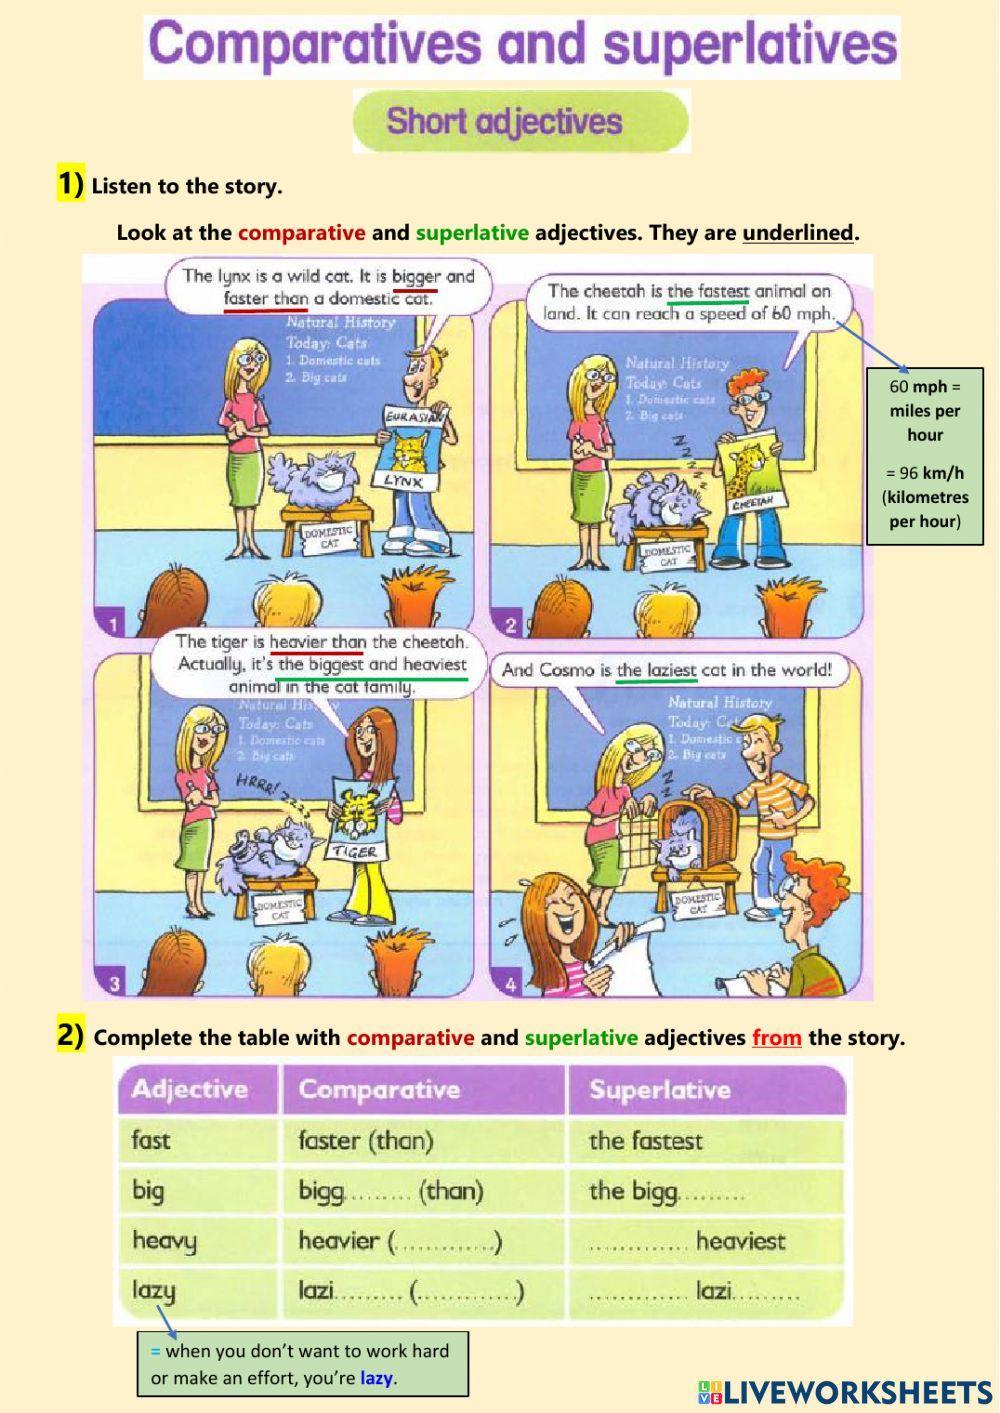 Comparatives or Superlatives - Short Adjectives